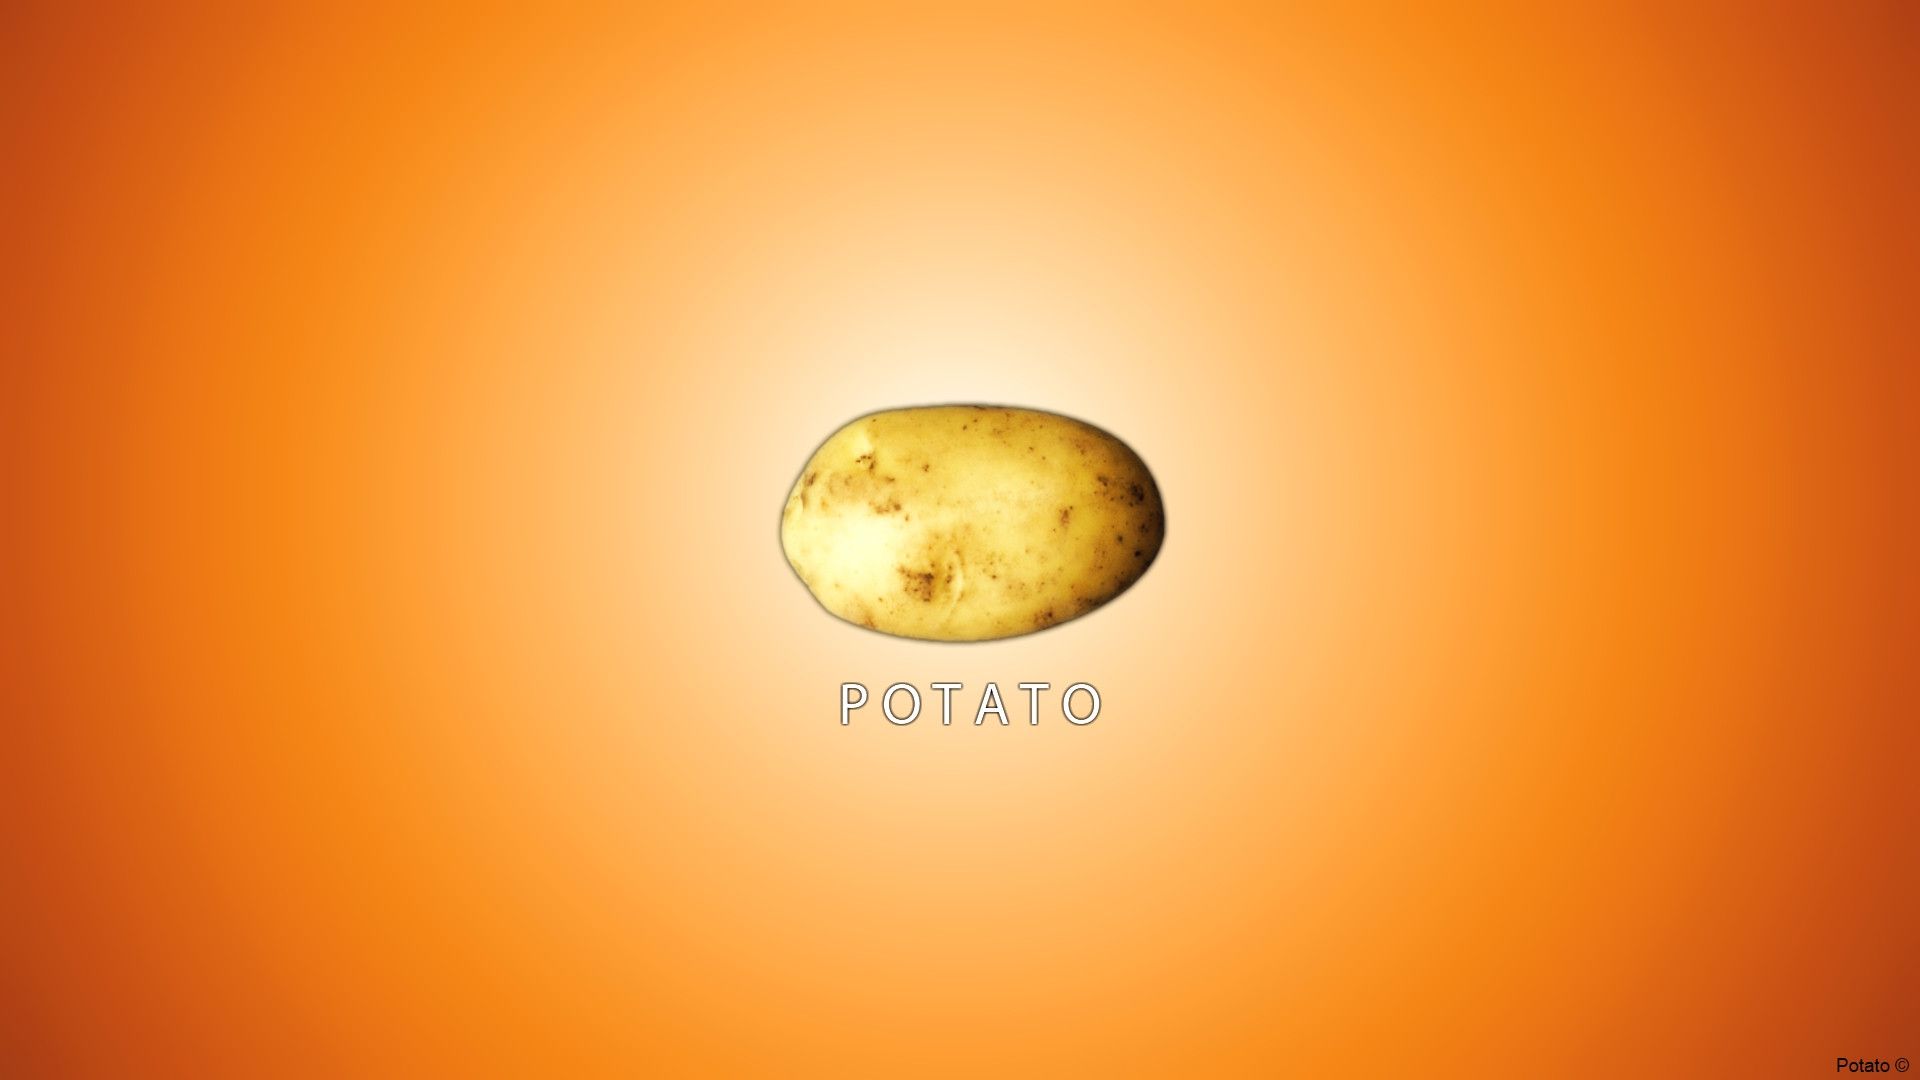 Best 58+ Potato Backgrounds on HipWallpapers.